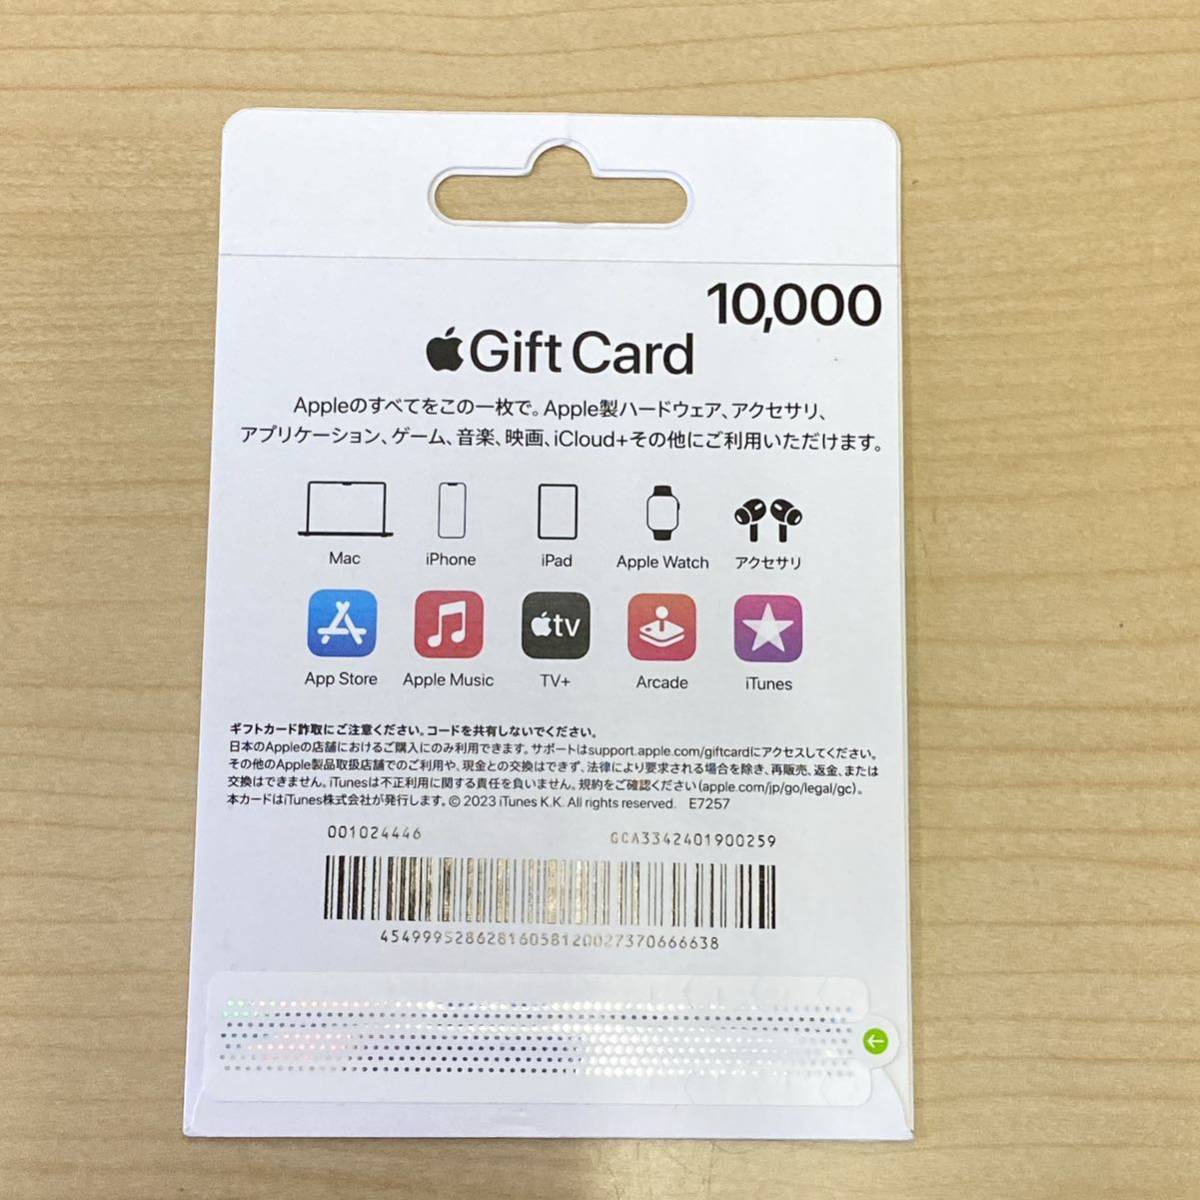 【TS0122】 Apple Gift Card アップル ギフトカード 10,000円分 ハードウェア アクセサリー アプリケーション ゲーム 音楽 映画 iCloud _画像2